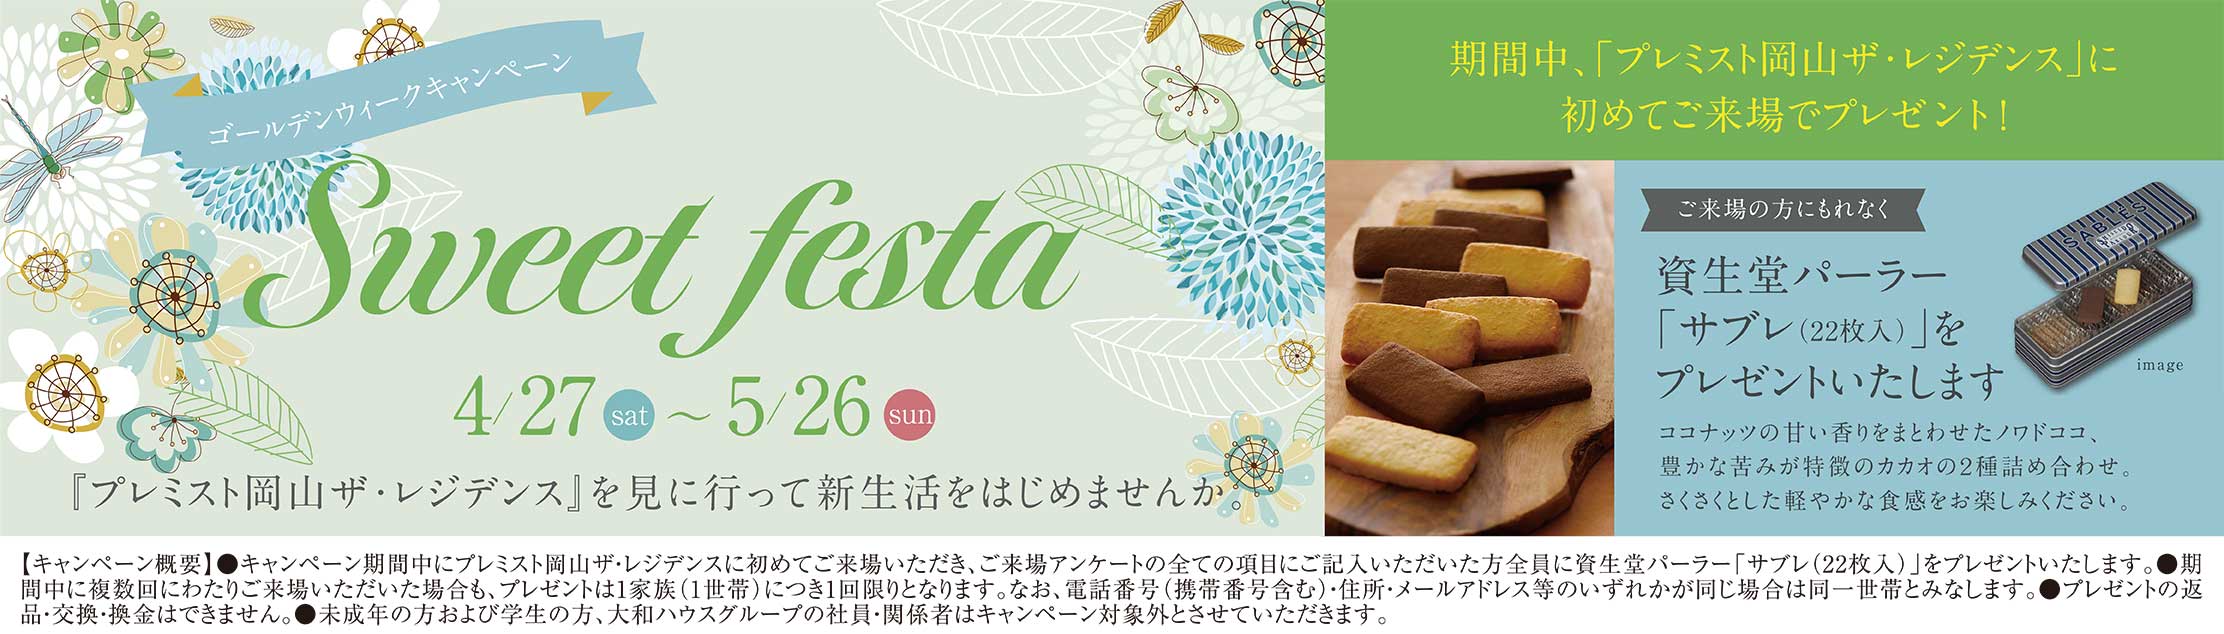 Sweet festa 4/27(土)〜5/26(日)